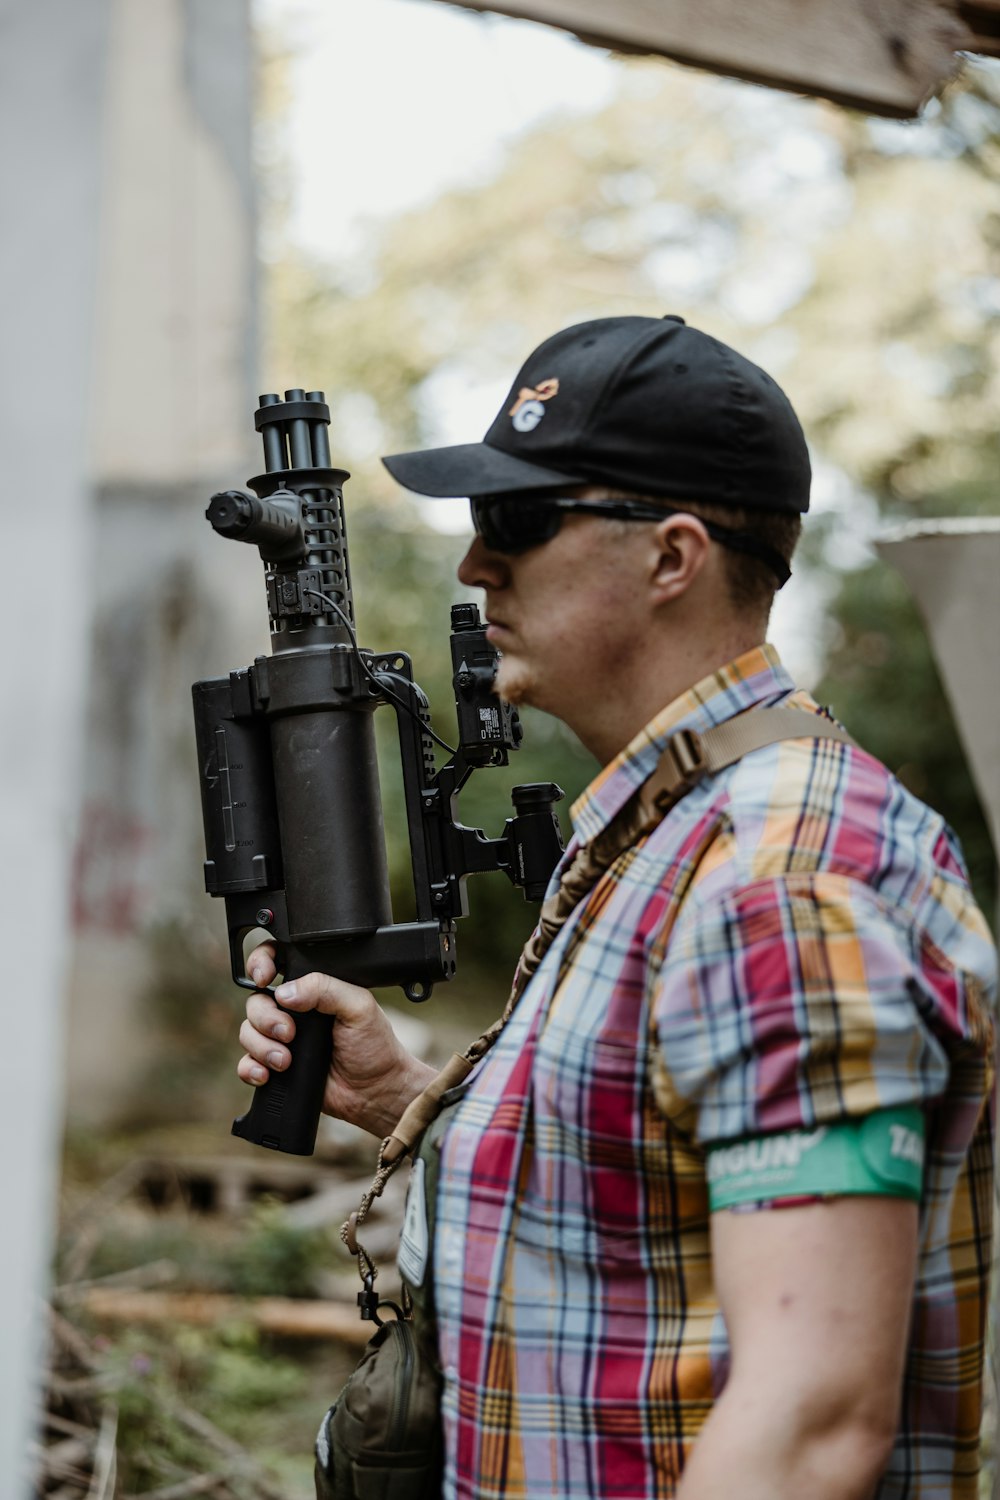 a man holding a camera and a gun